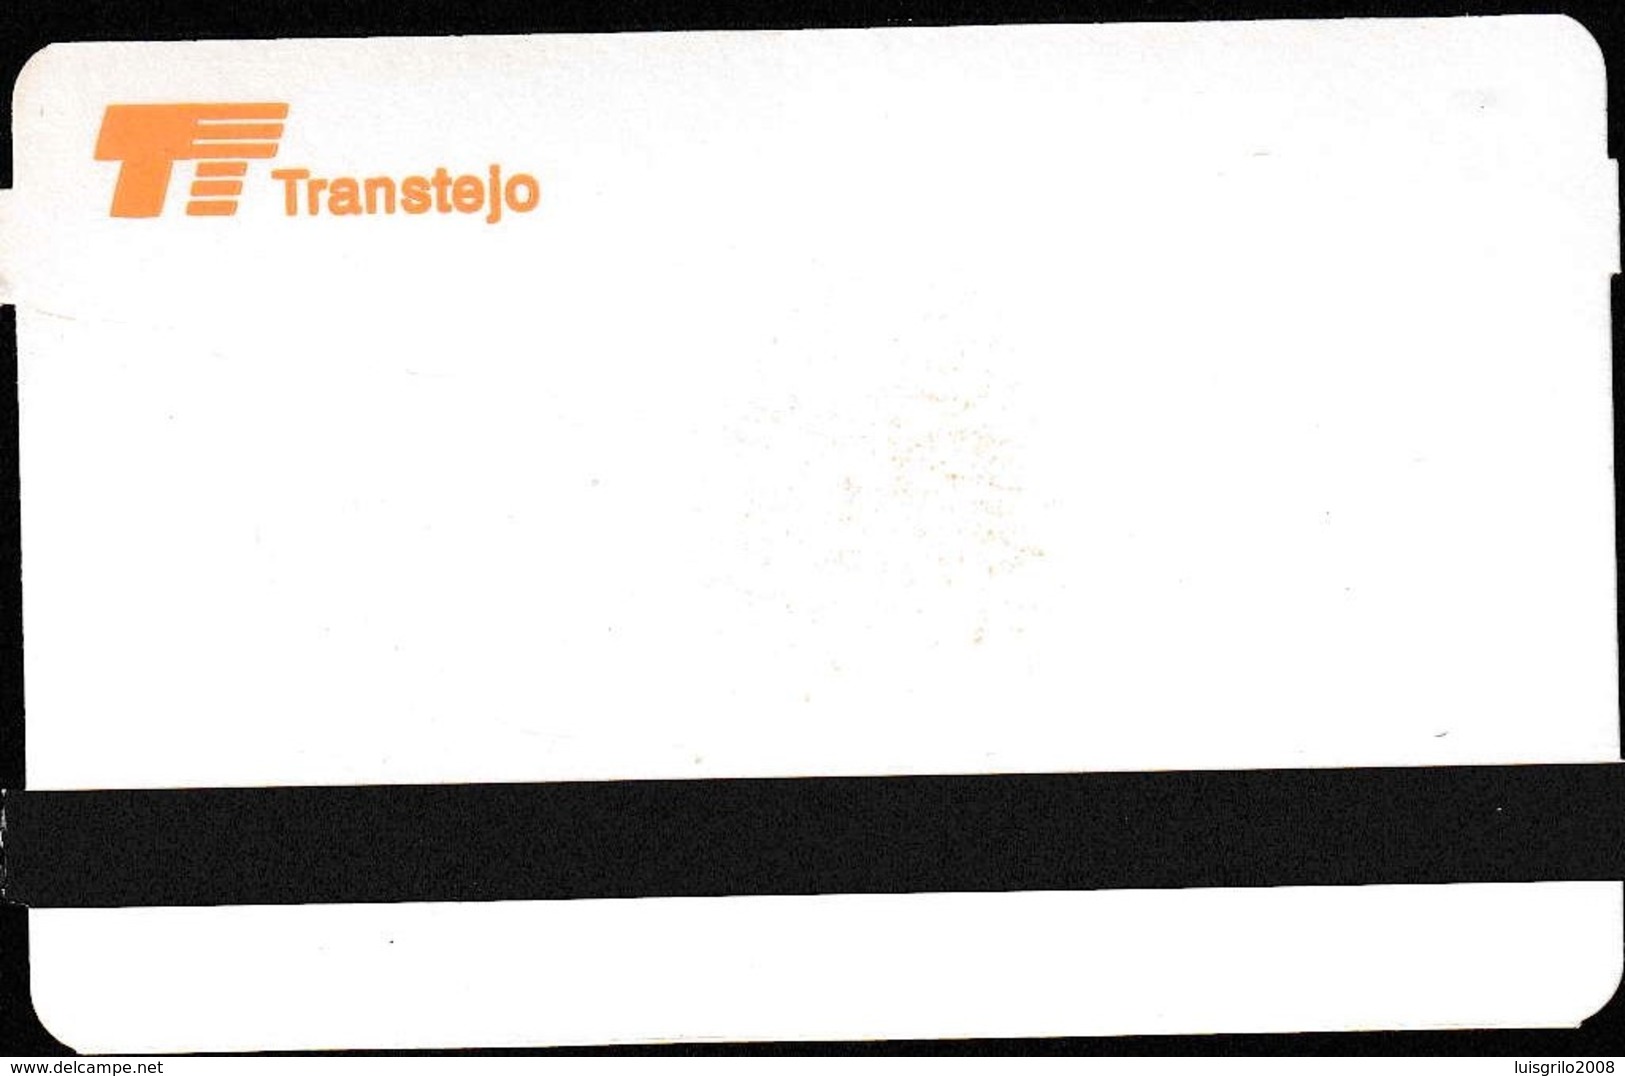 Boat Ticket, Portugal - Tejo River / 2006, TT Transtejo - Zona Estreita - Europa